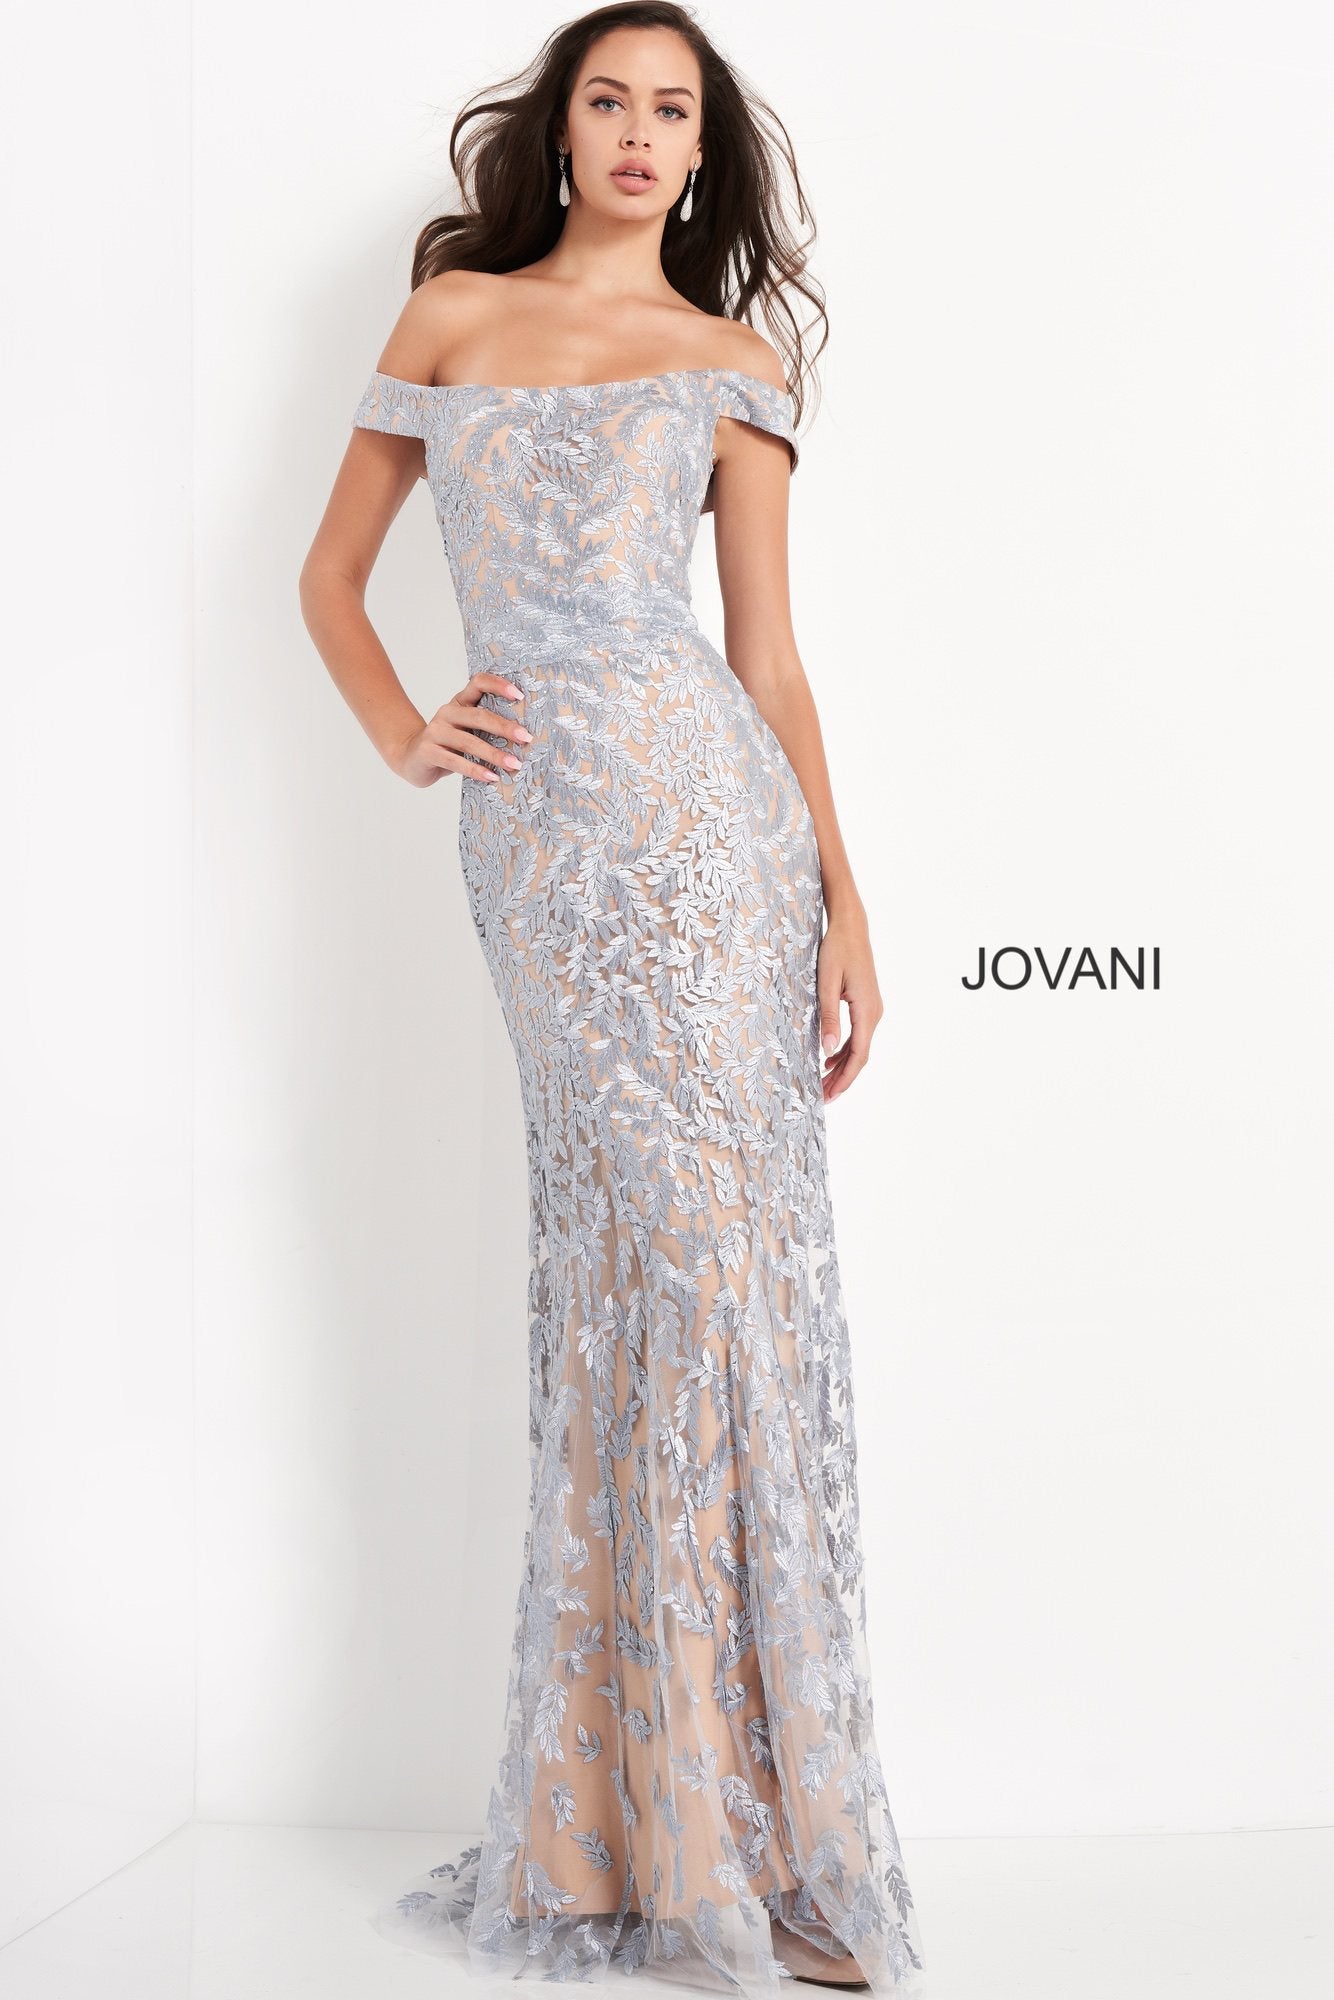 Jovani 49634 Off the Shoulder Embroidered Mother of the Bride Dress